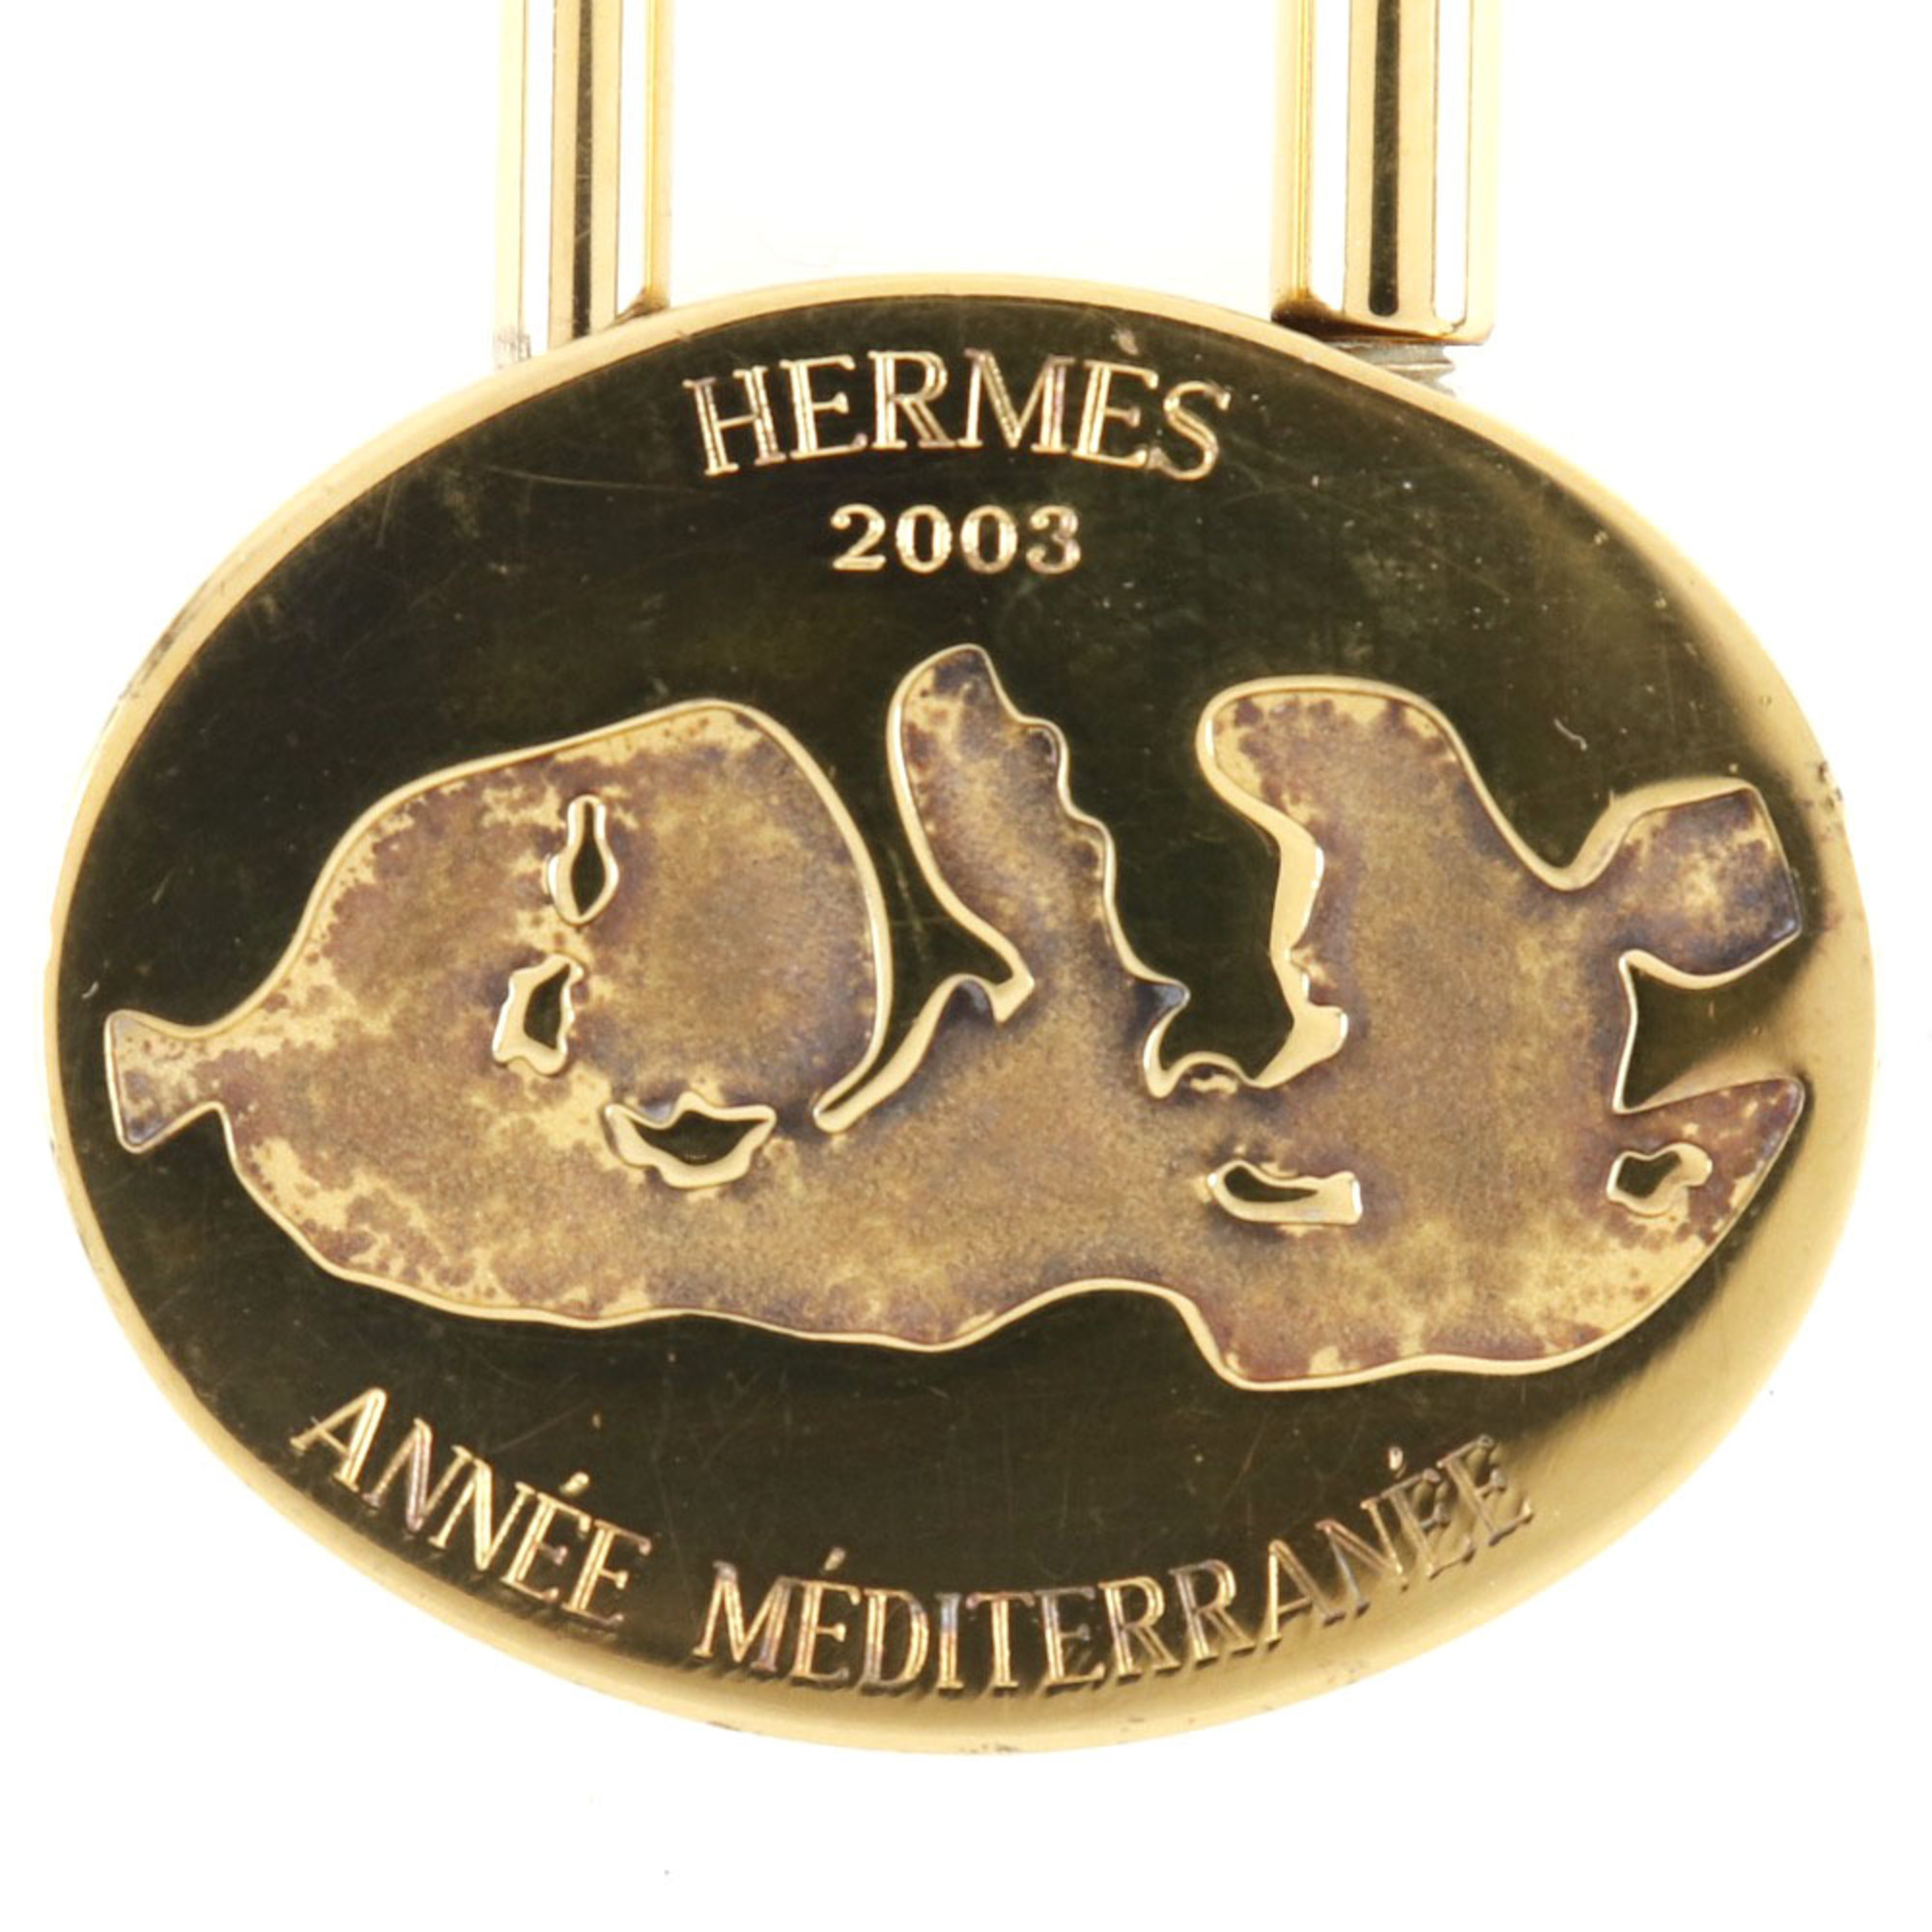 HERMES Hermes 2003 ANNEE MEDITERRANEE Mediterranean gold plated unisex cadena